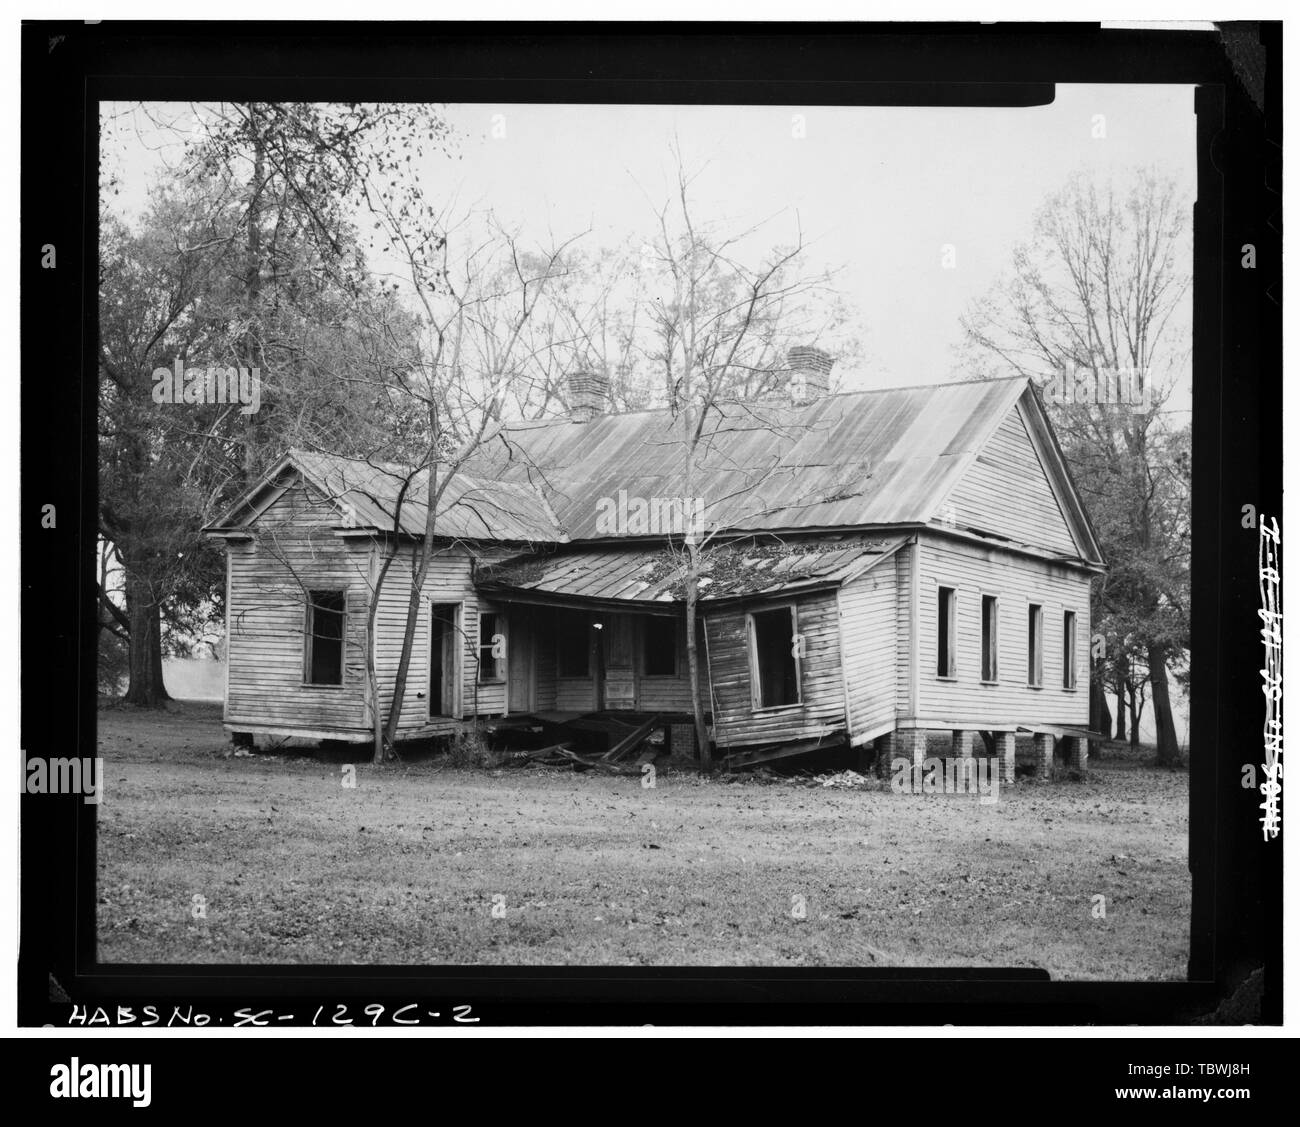 MATTHEW SINGLETON RESIDENCE, LOOKING NORTHWEST  Kensington Plantation, Matthew Singleton Residence, U.S. Route 601, Eastover, Richland County, SC Stock Photo